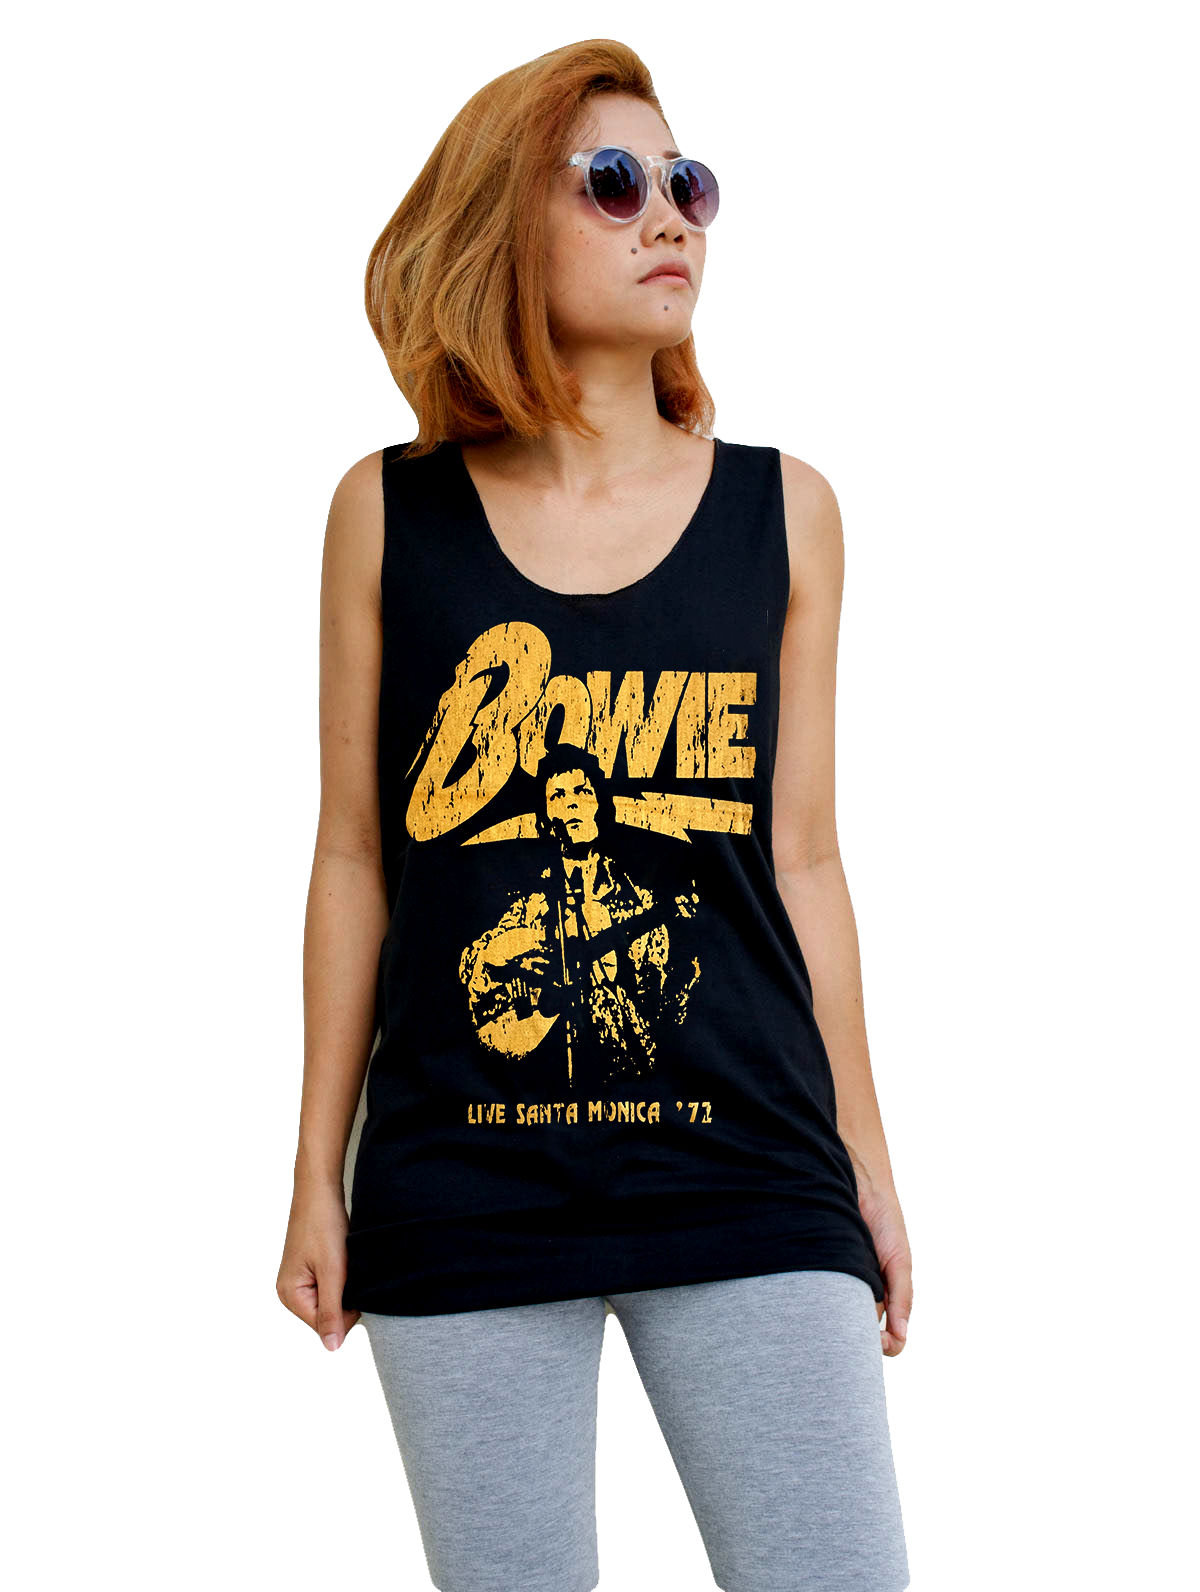 Unisex David Bowie Tank-Top Singlet vest Sleeveless T-shirt